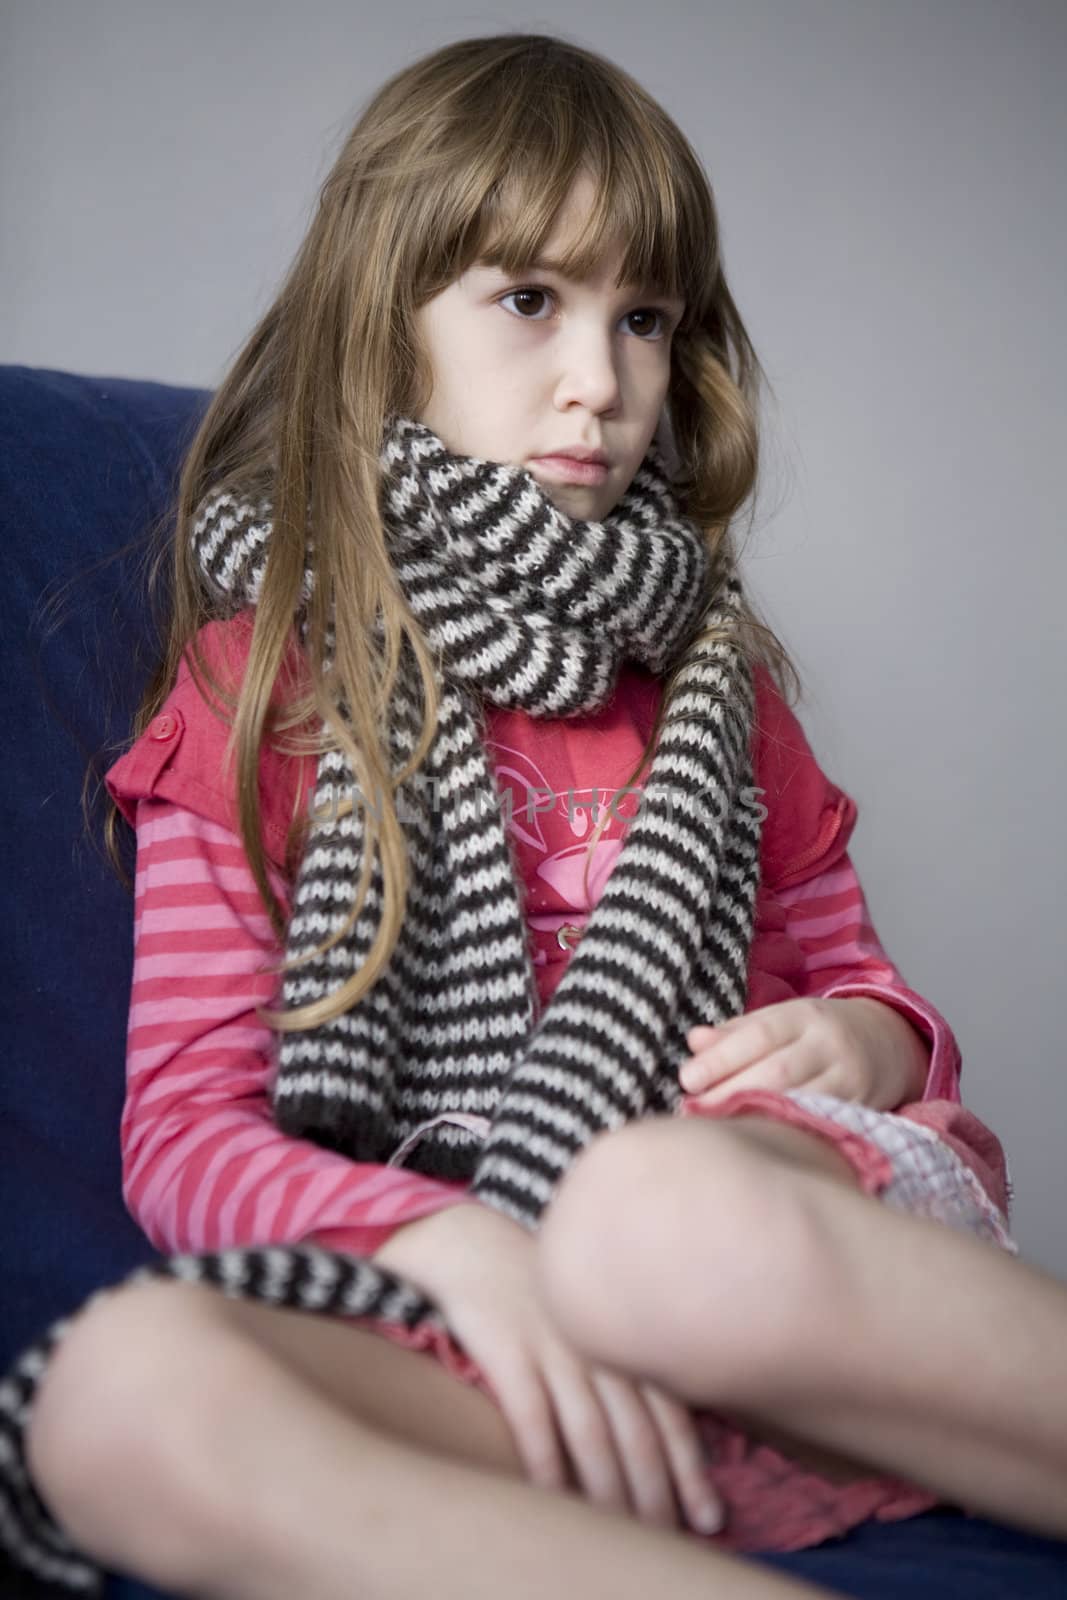 Llittle cute sick girl with scarf. Sore throat by elenarostunova